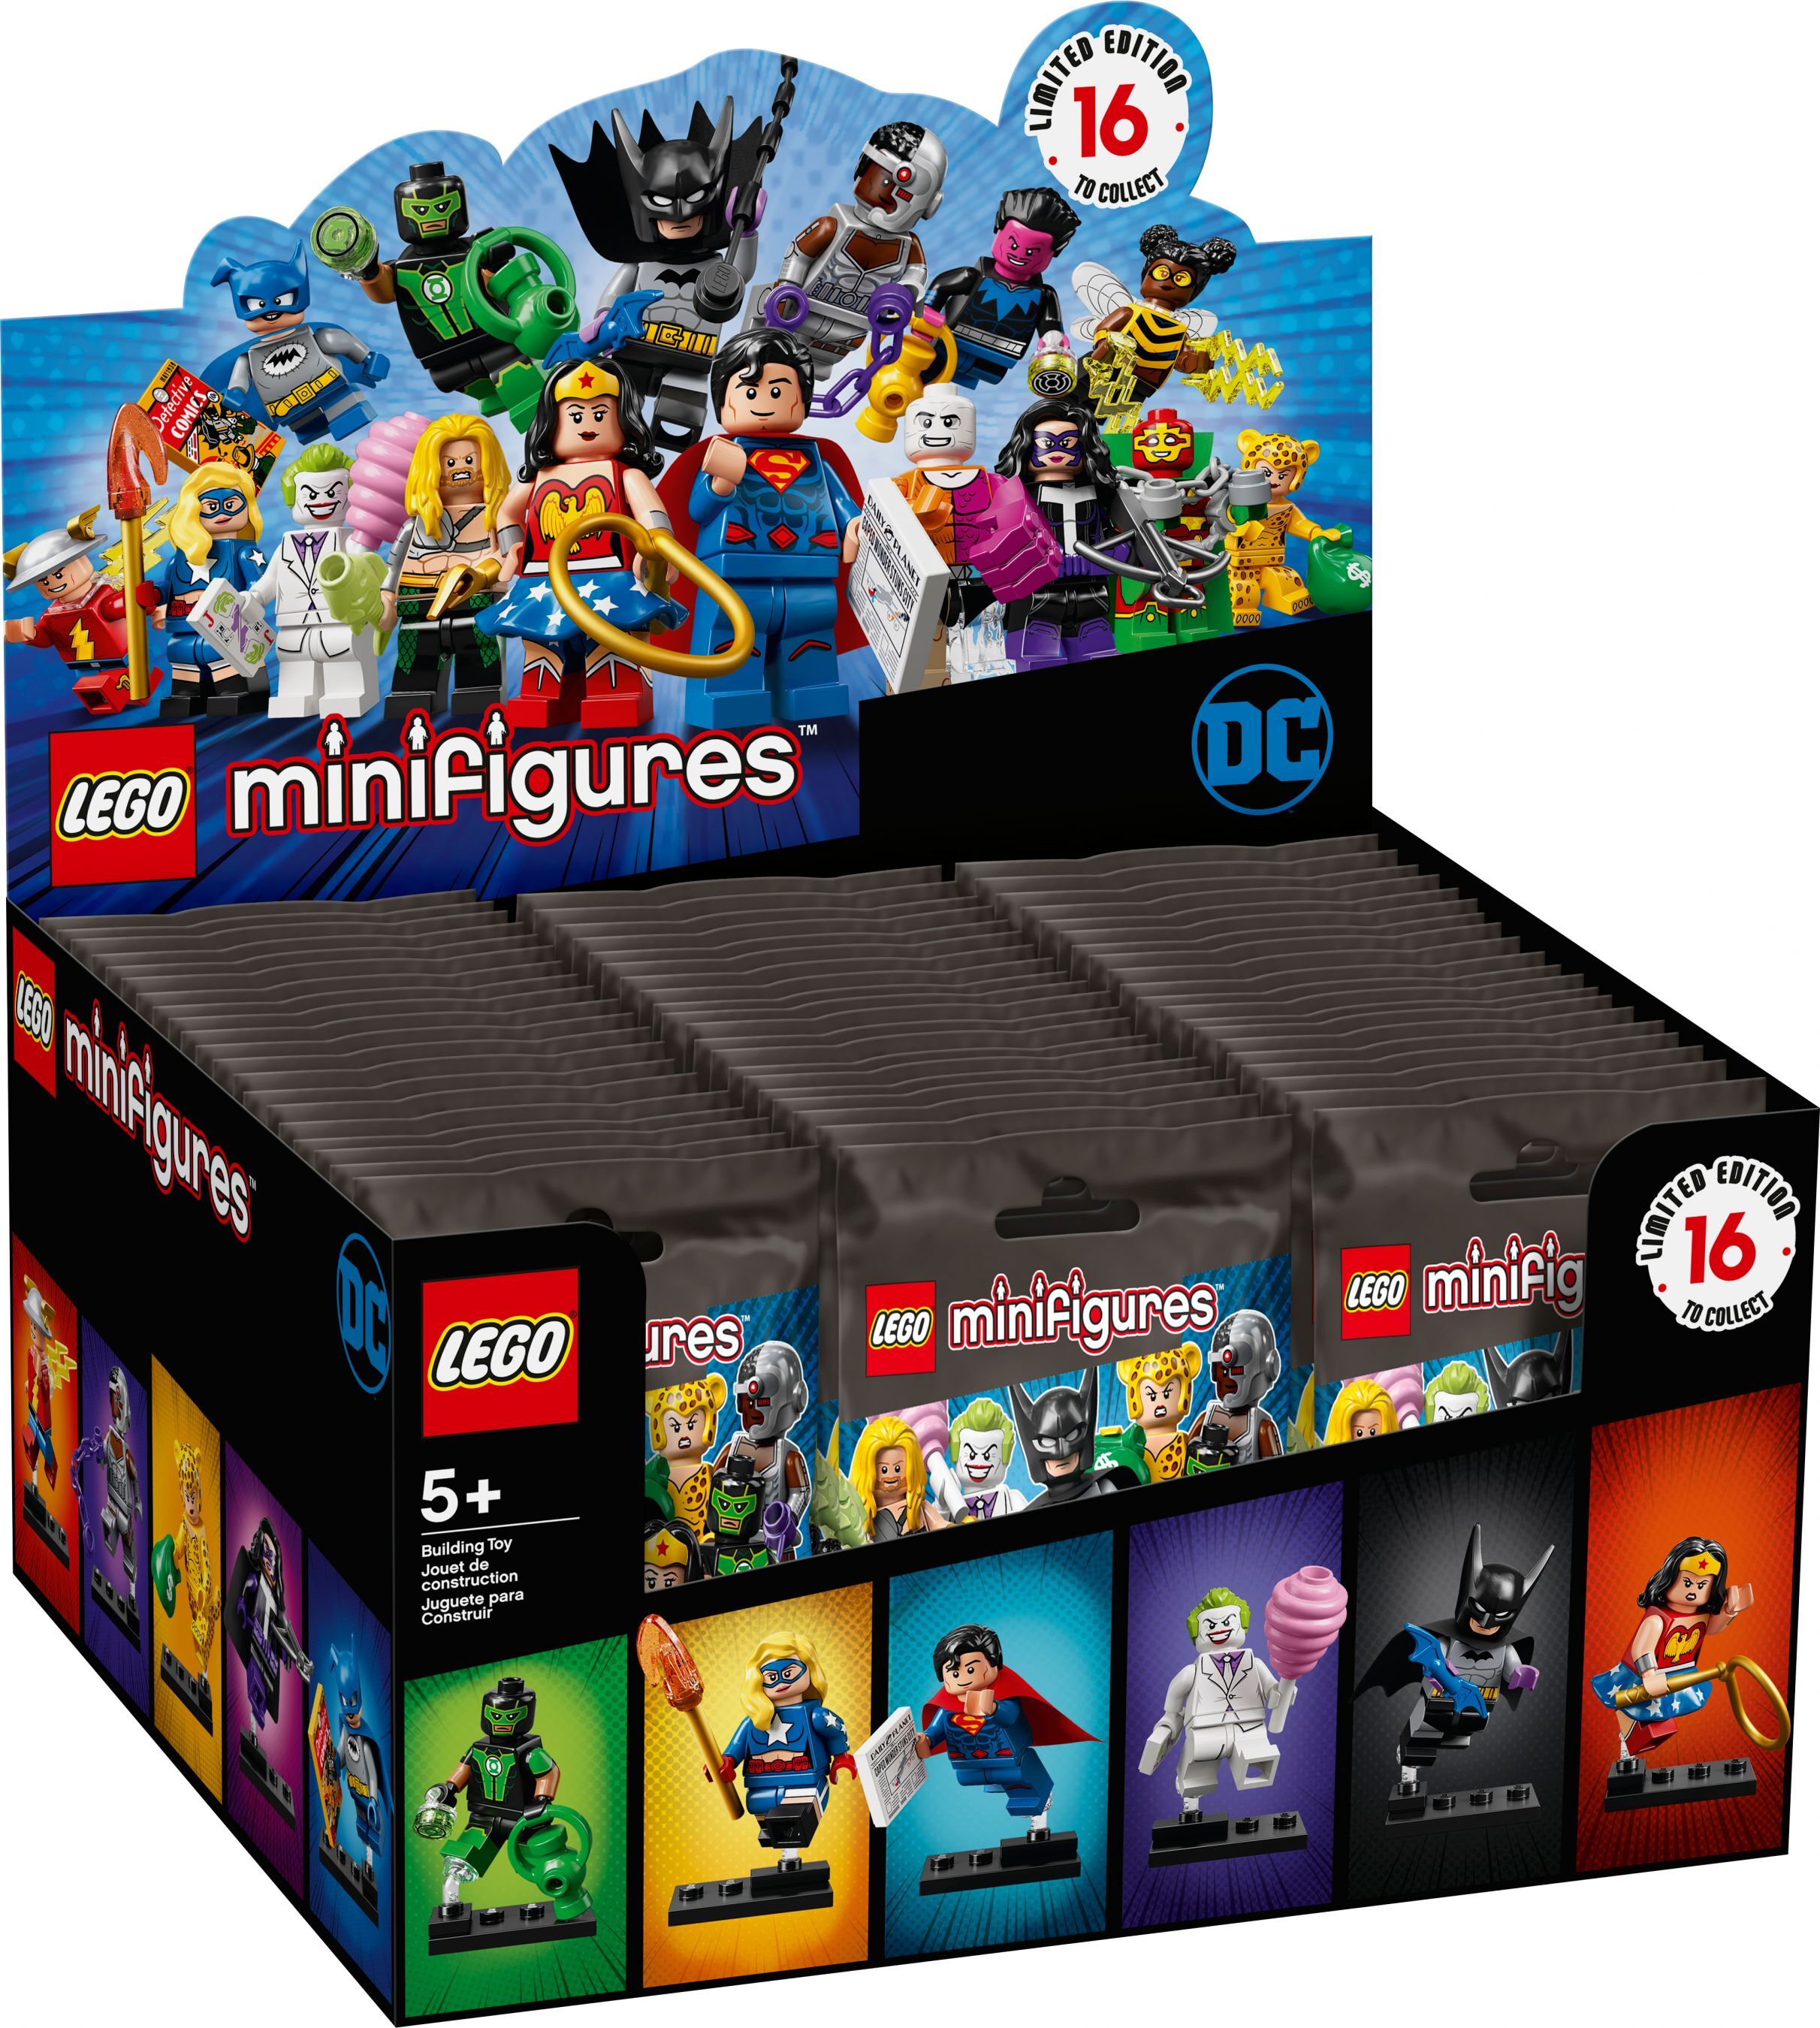 DC Super Heroes Series Random Set of 6 71026 New Sealed Blind Bags LEGO Minifigures 